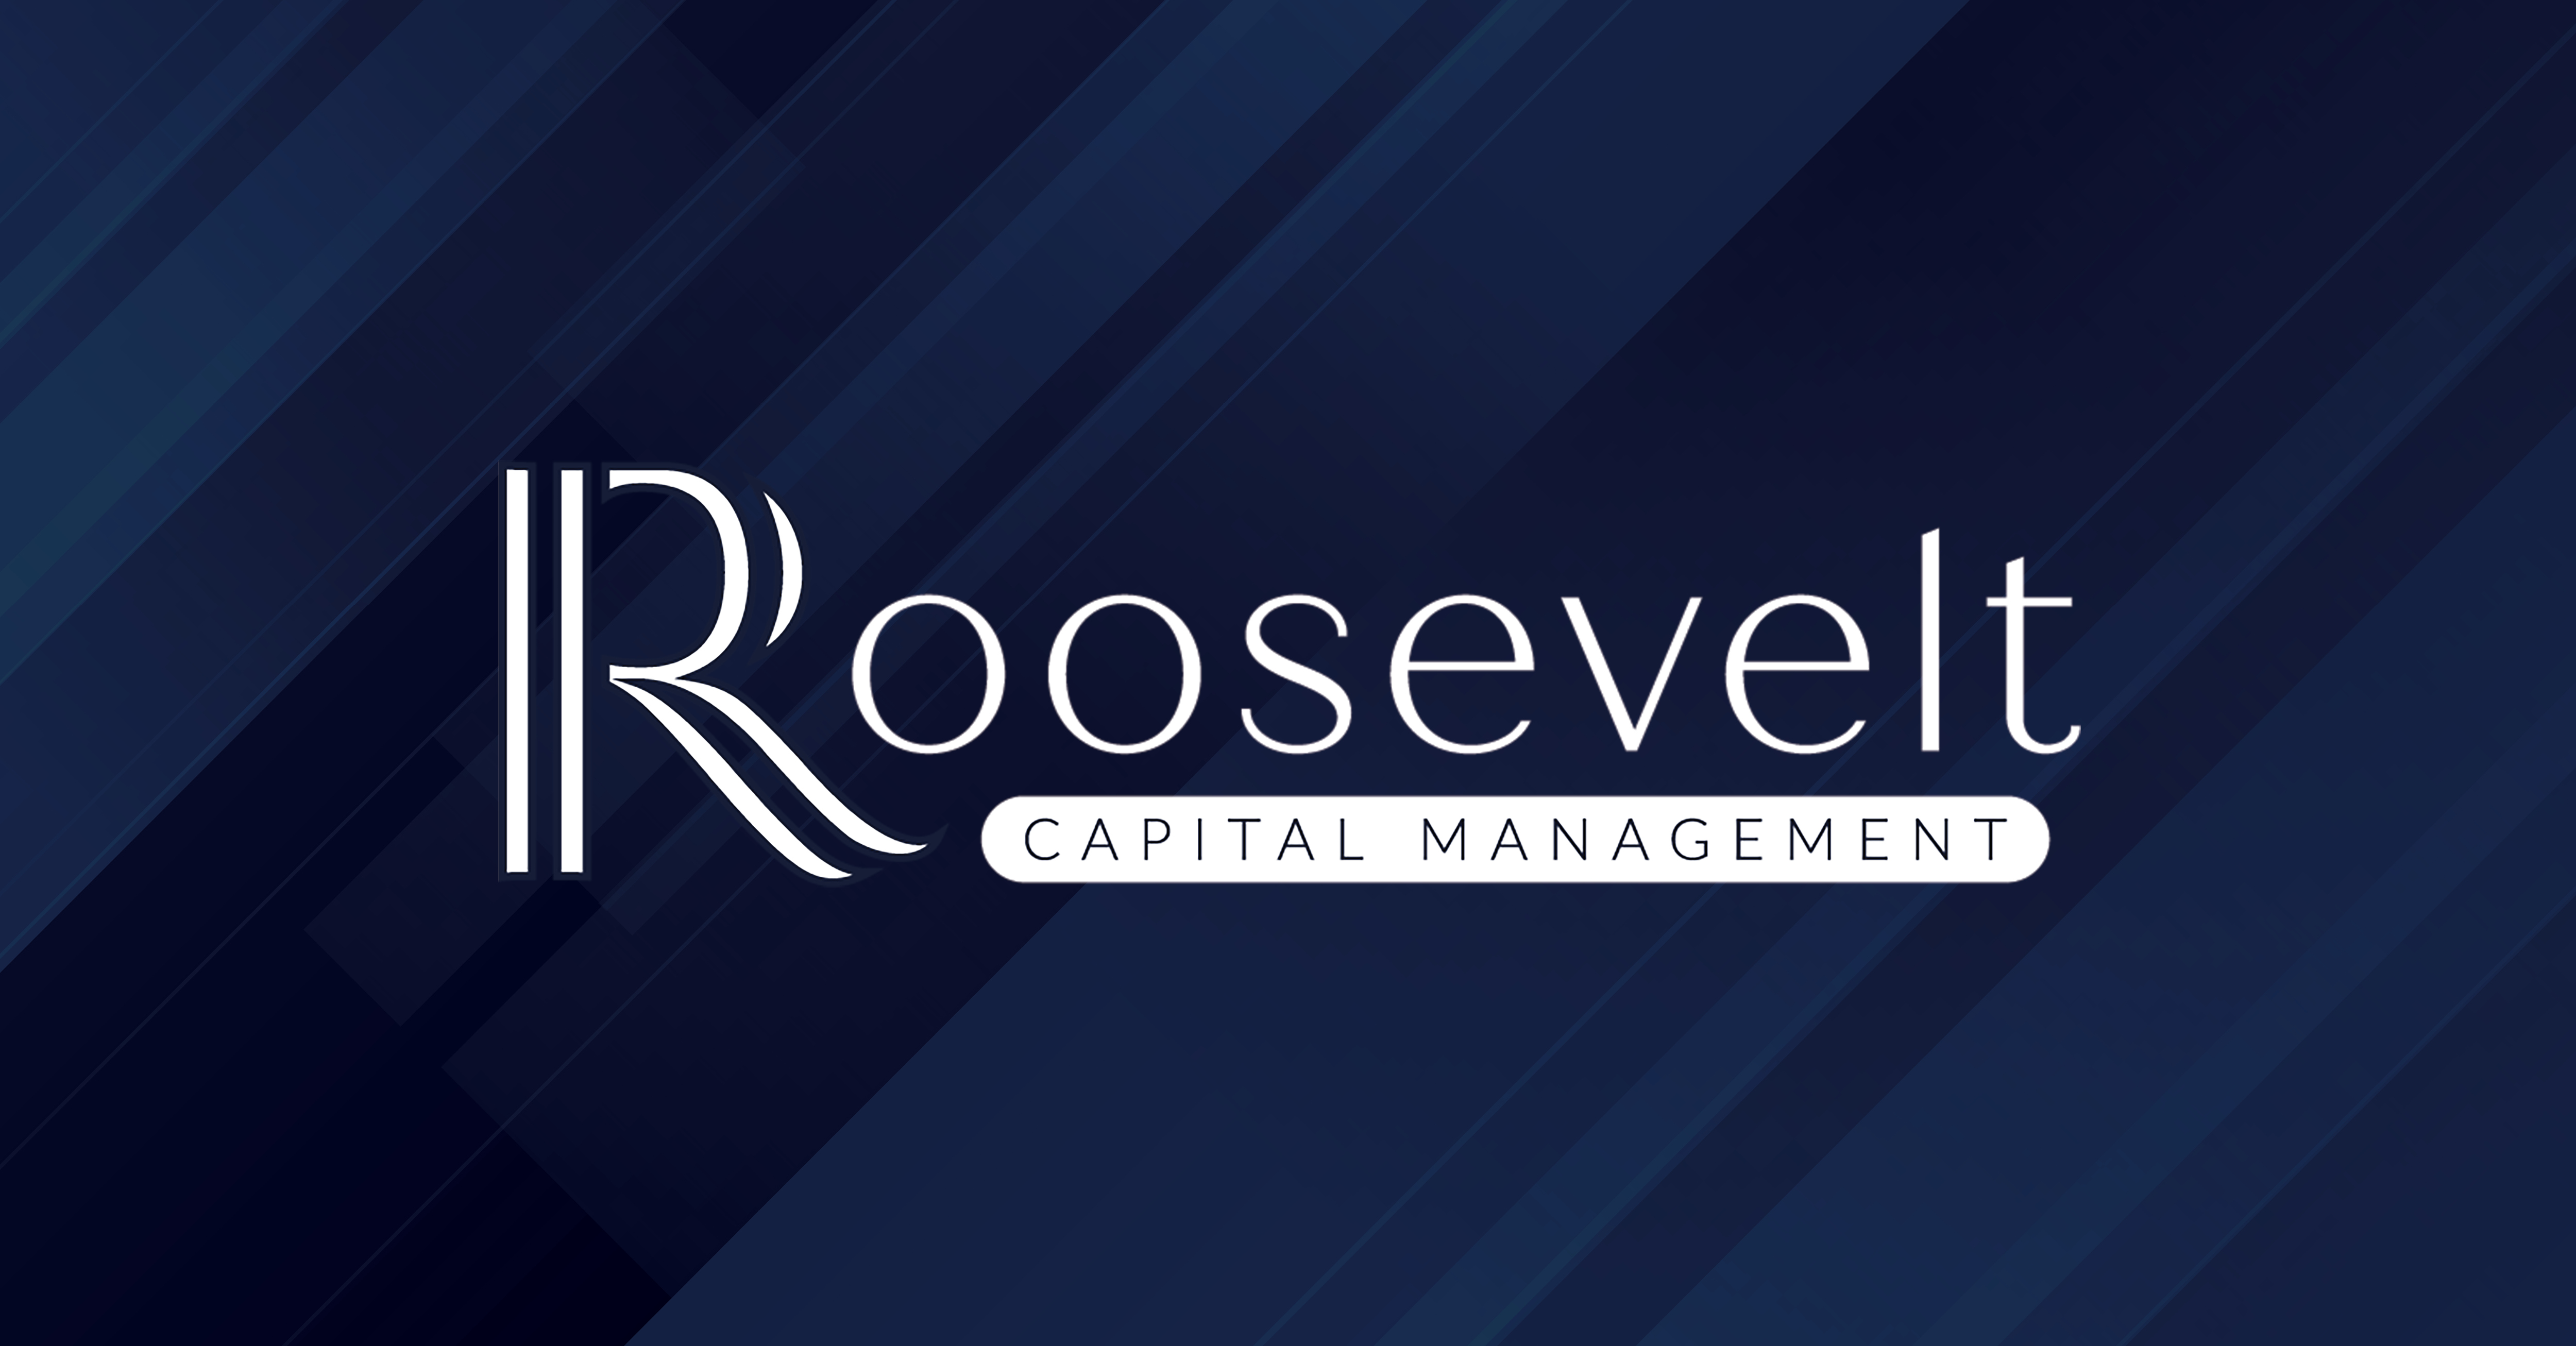 Roosevelt Capital Management (RCM) becomes Money Manager on the Schwab Managed Accounts Marketplace